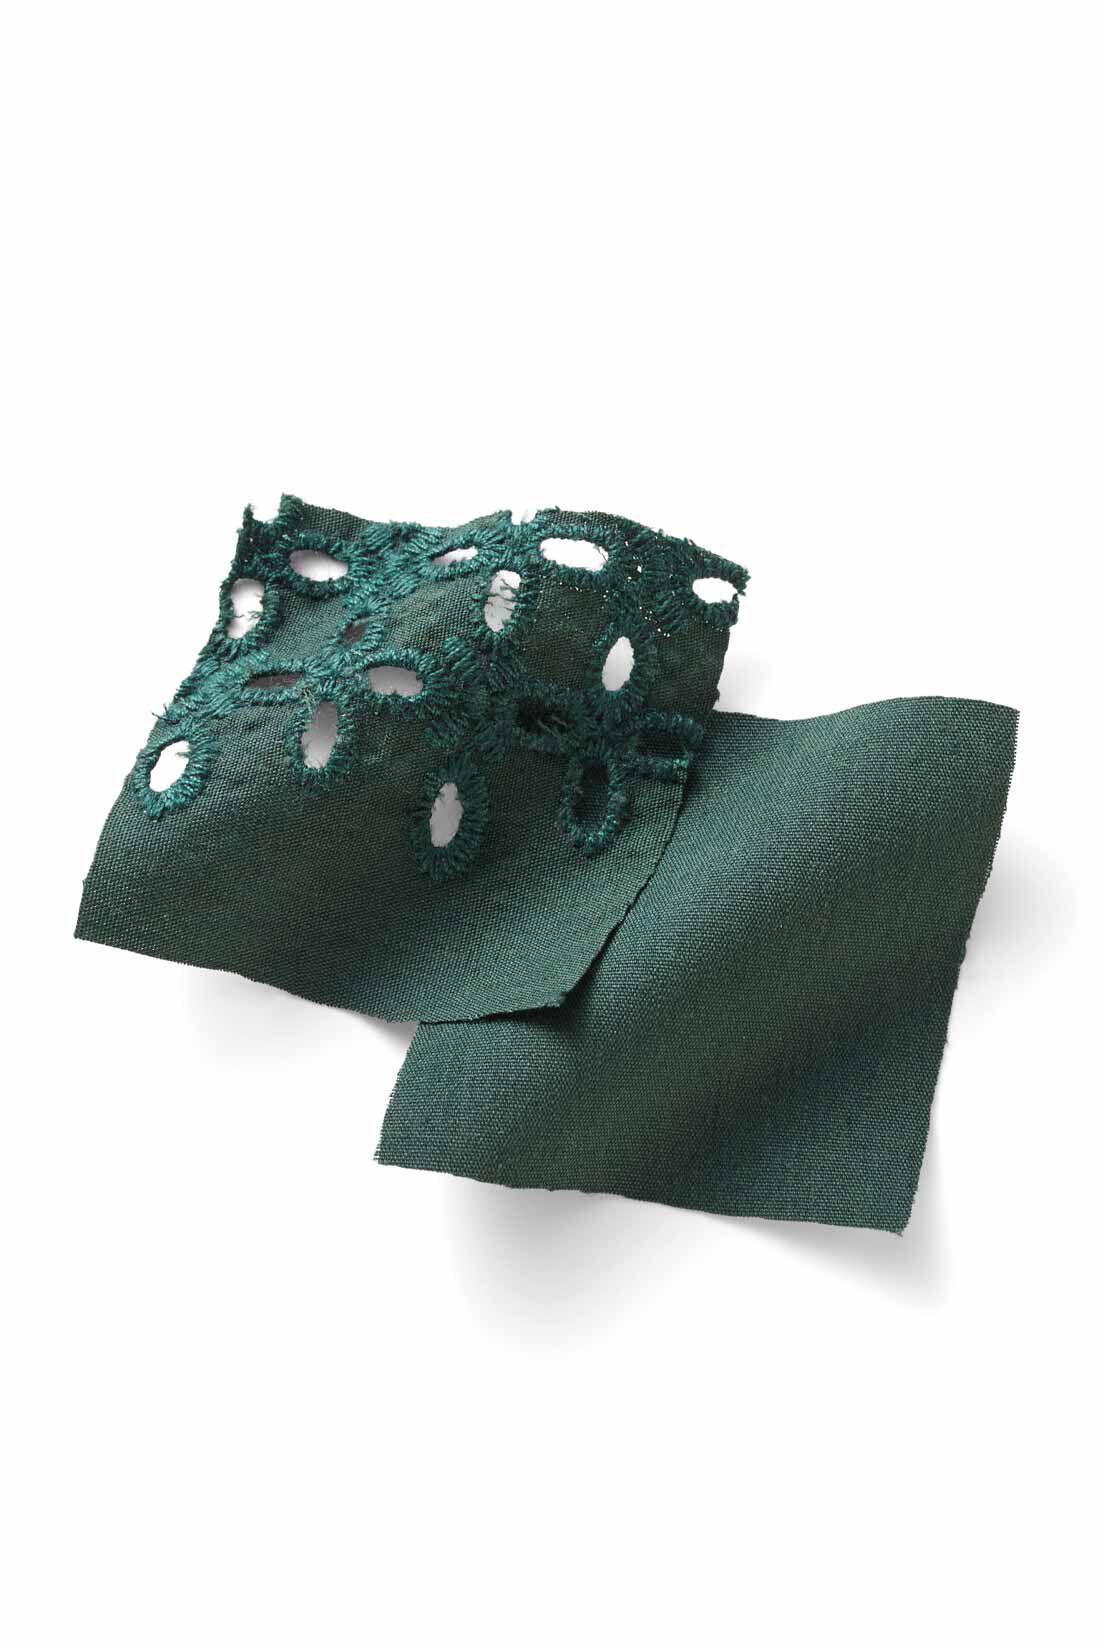 DRECO by IEDIT|【3～10日でお届け】IEDIT[イディット]　アンティーク風デザインの袖レースブラウス〈グリーン〉|張り感のある布はく素材とレトロな表情のエンブロイダリーレースはしわが気になりにくいナチュラルな素材感。